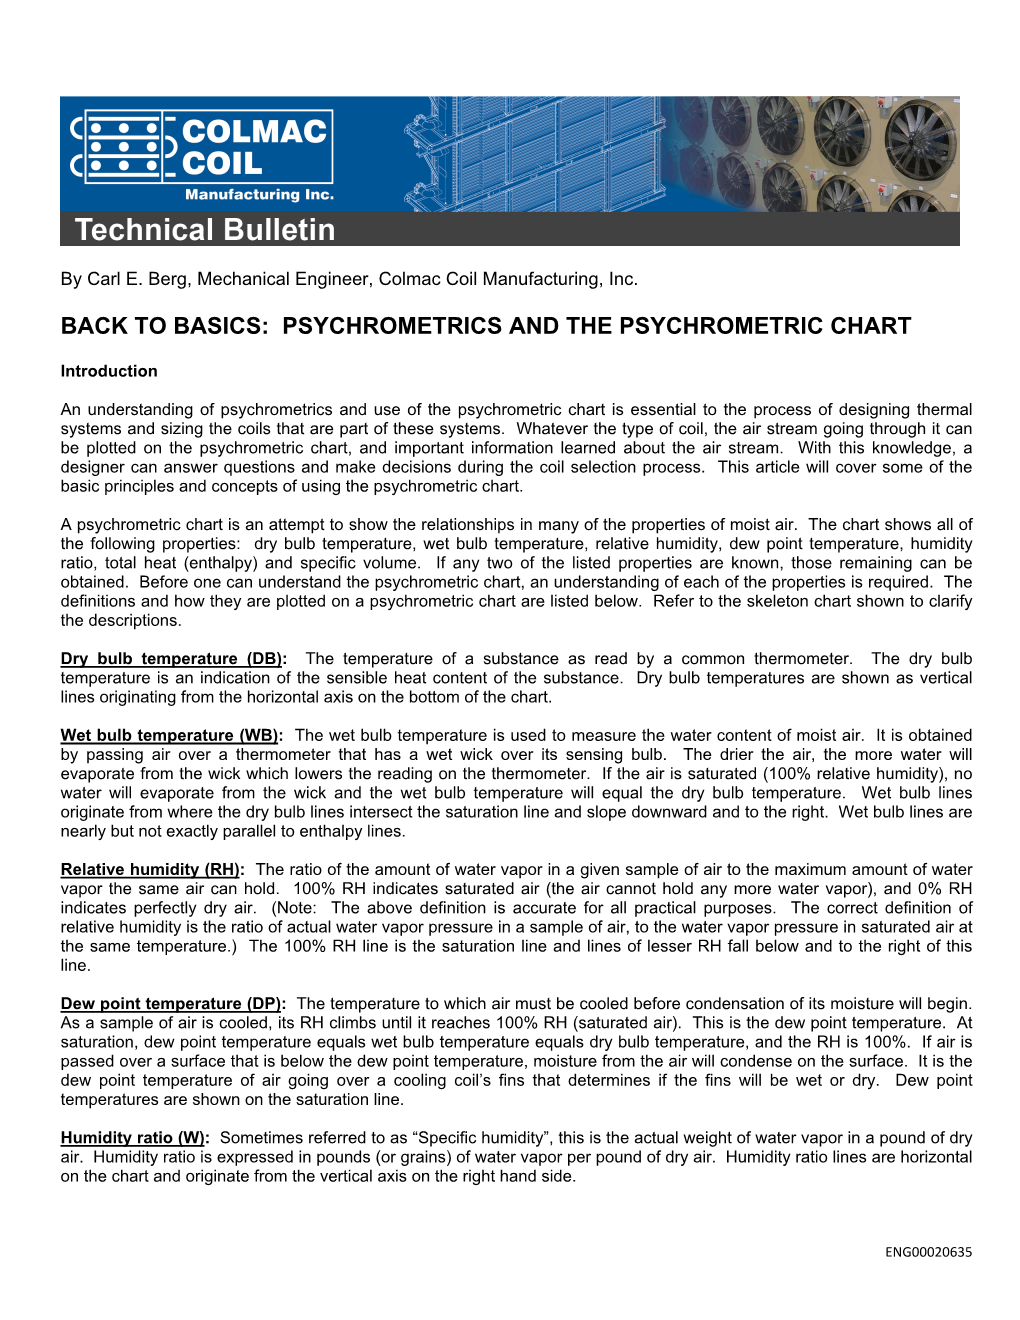 Psychrometrics and the Psychrometric Chart